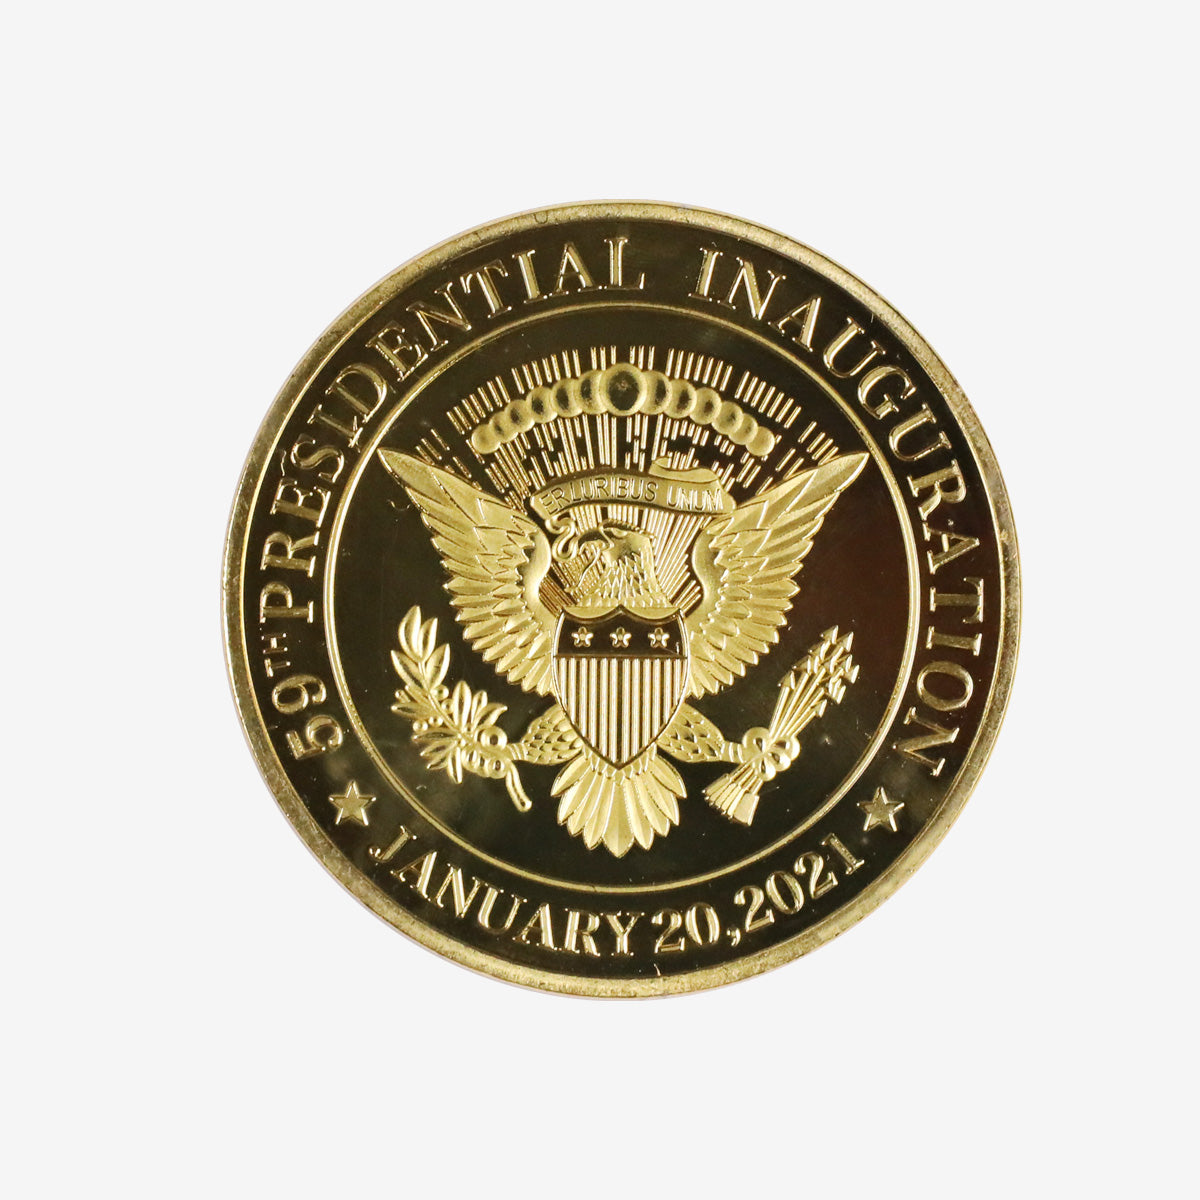 Donald Trump 45th President Colorized Commemorative Coin Back